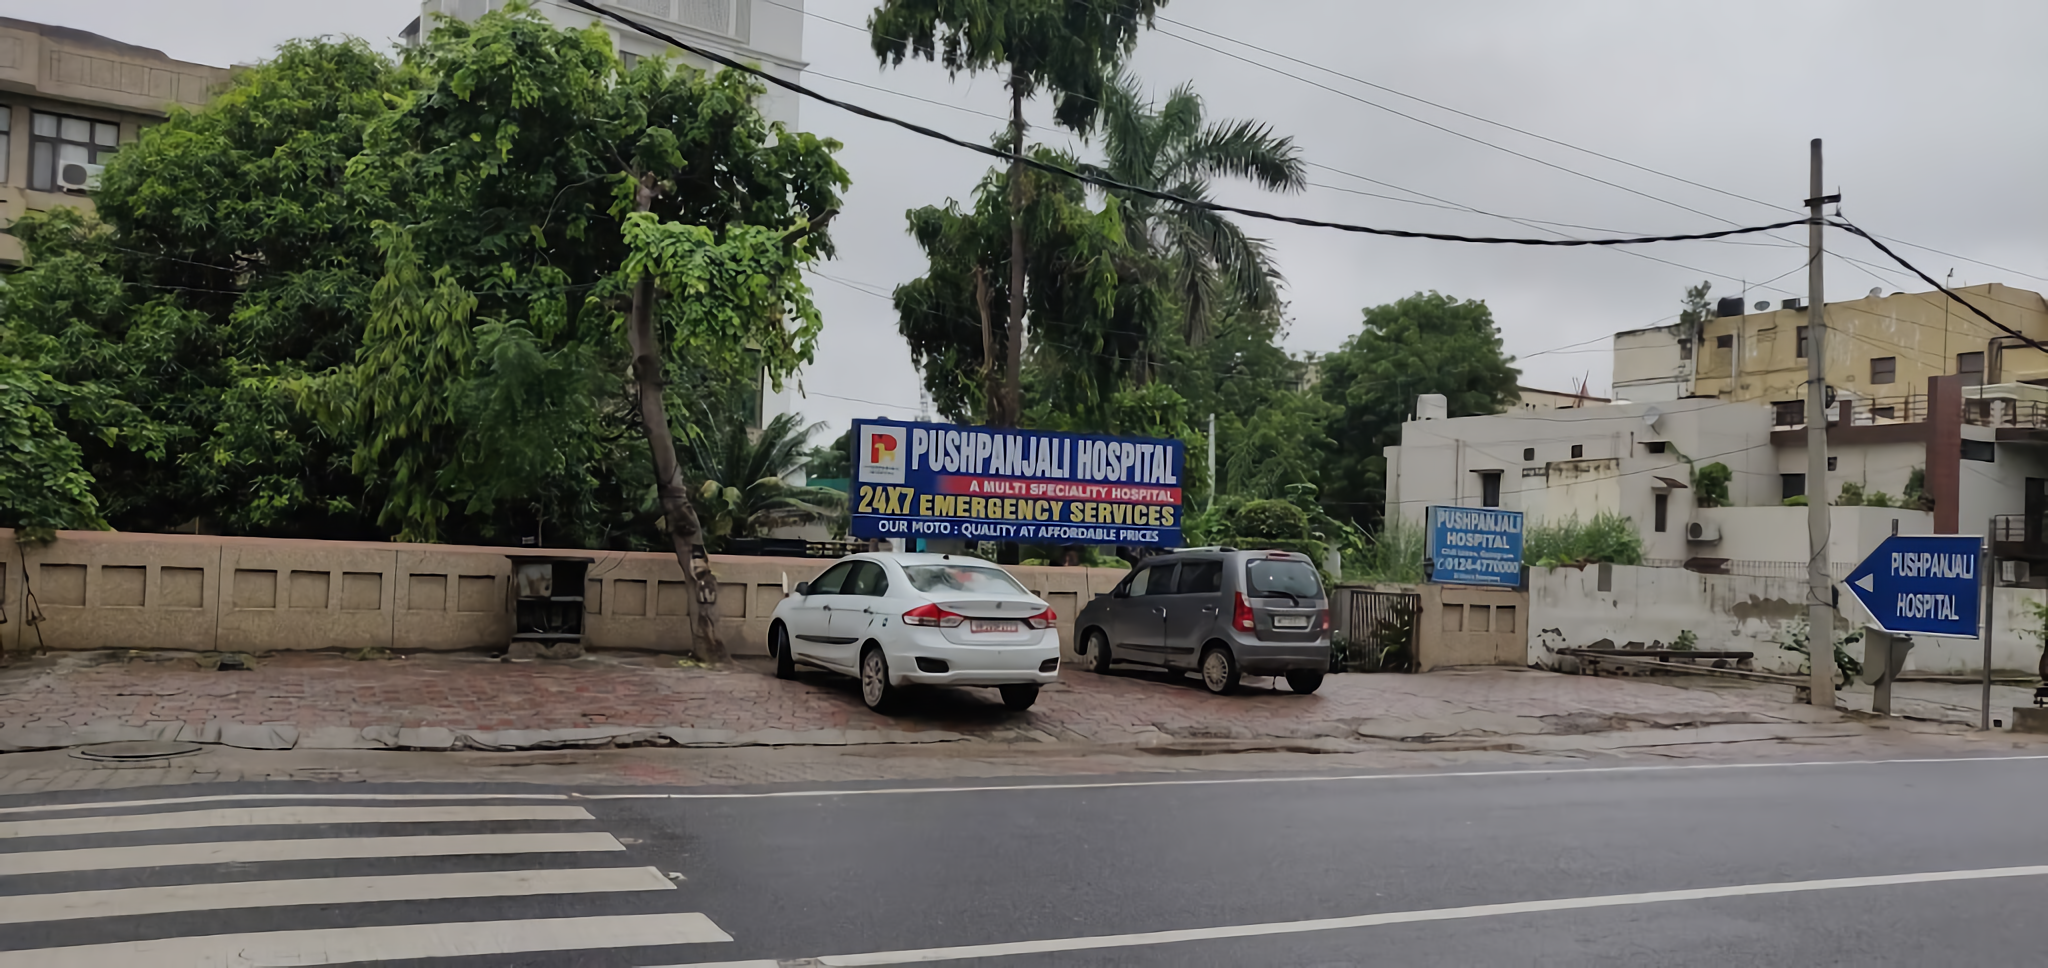 Pushpanjali Hospital Gurgaon Civil Lines